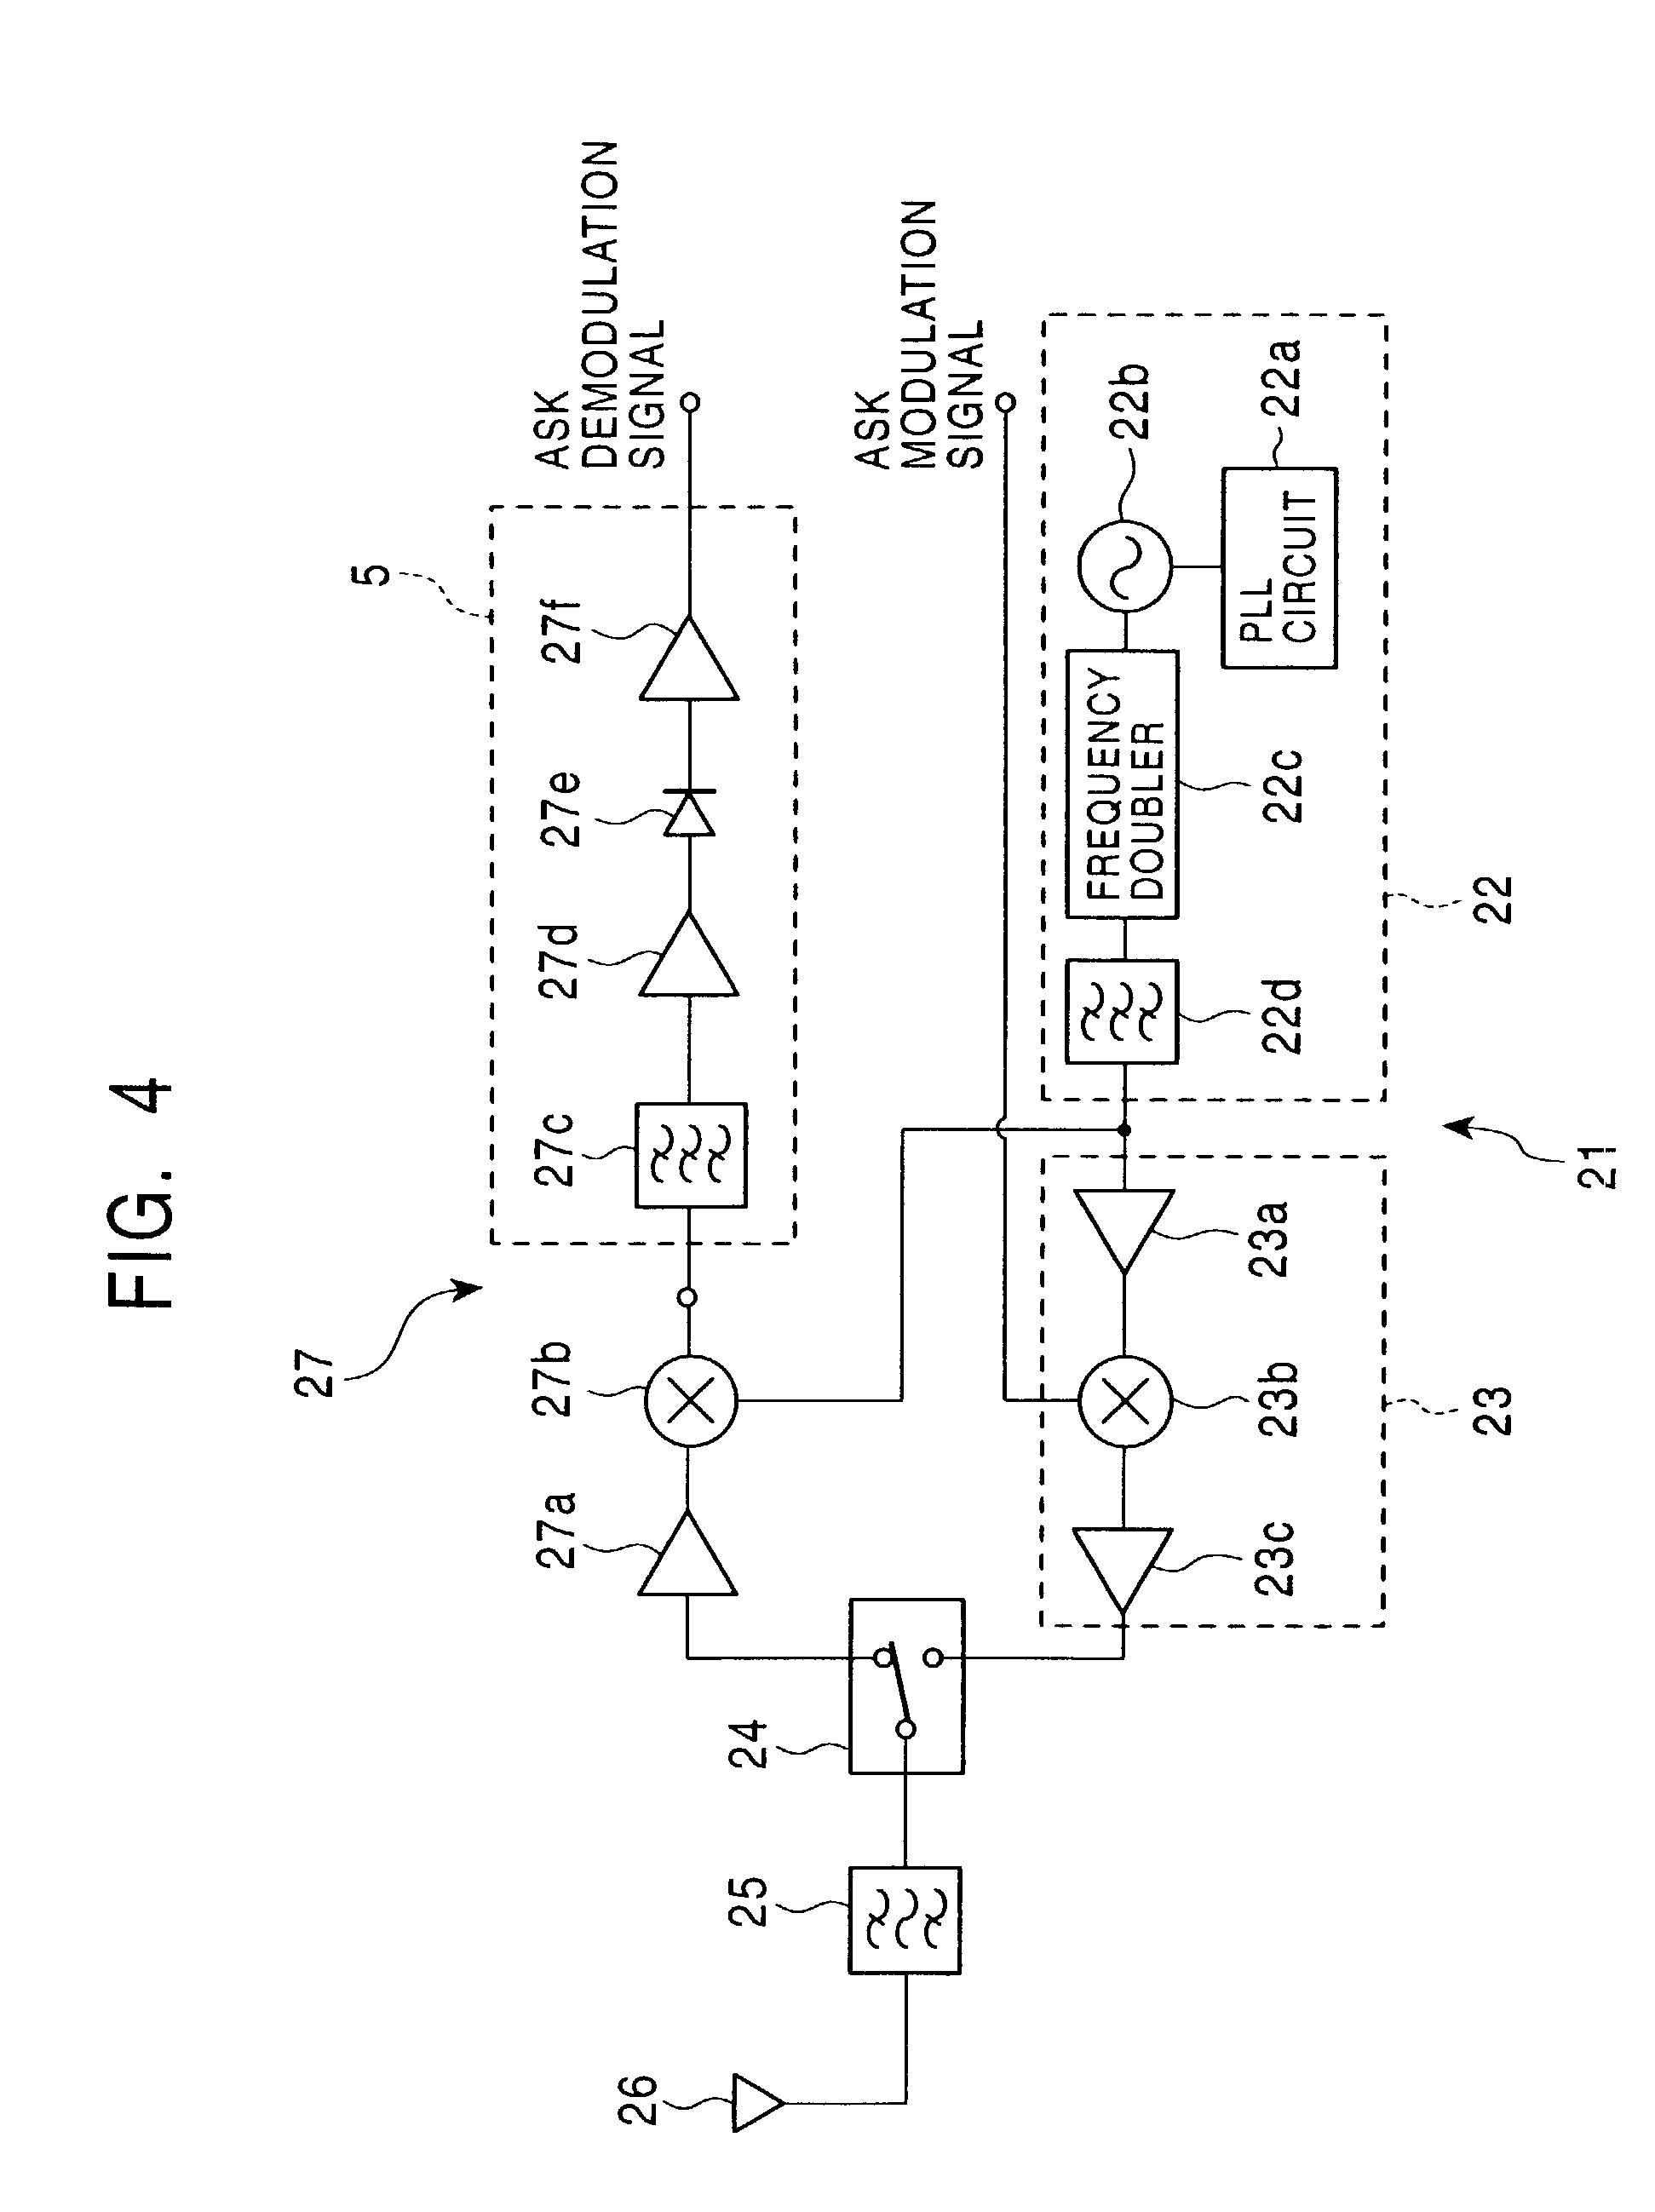 Miniaturized transmitter-receiver unit